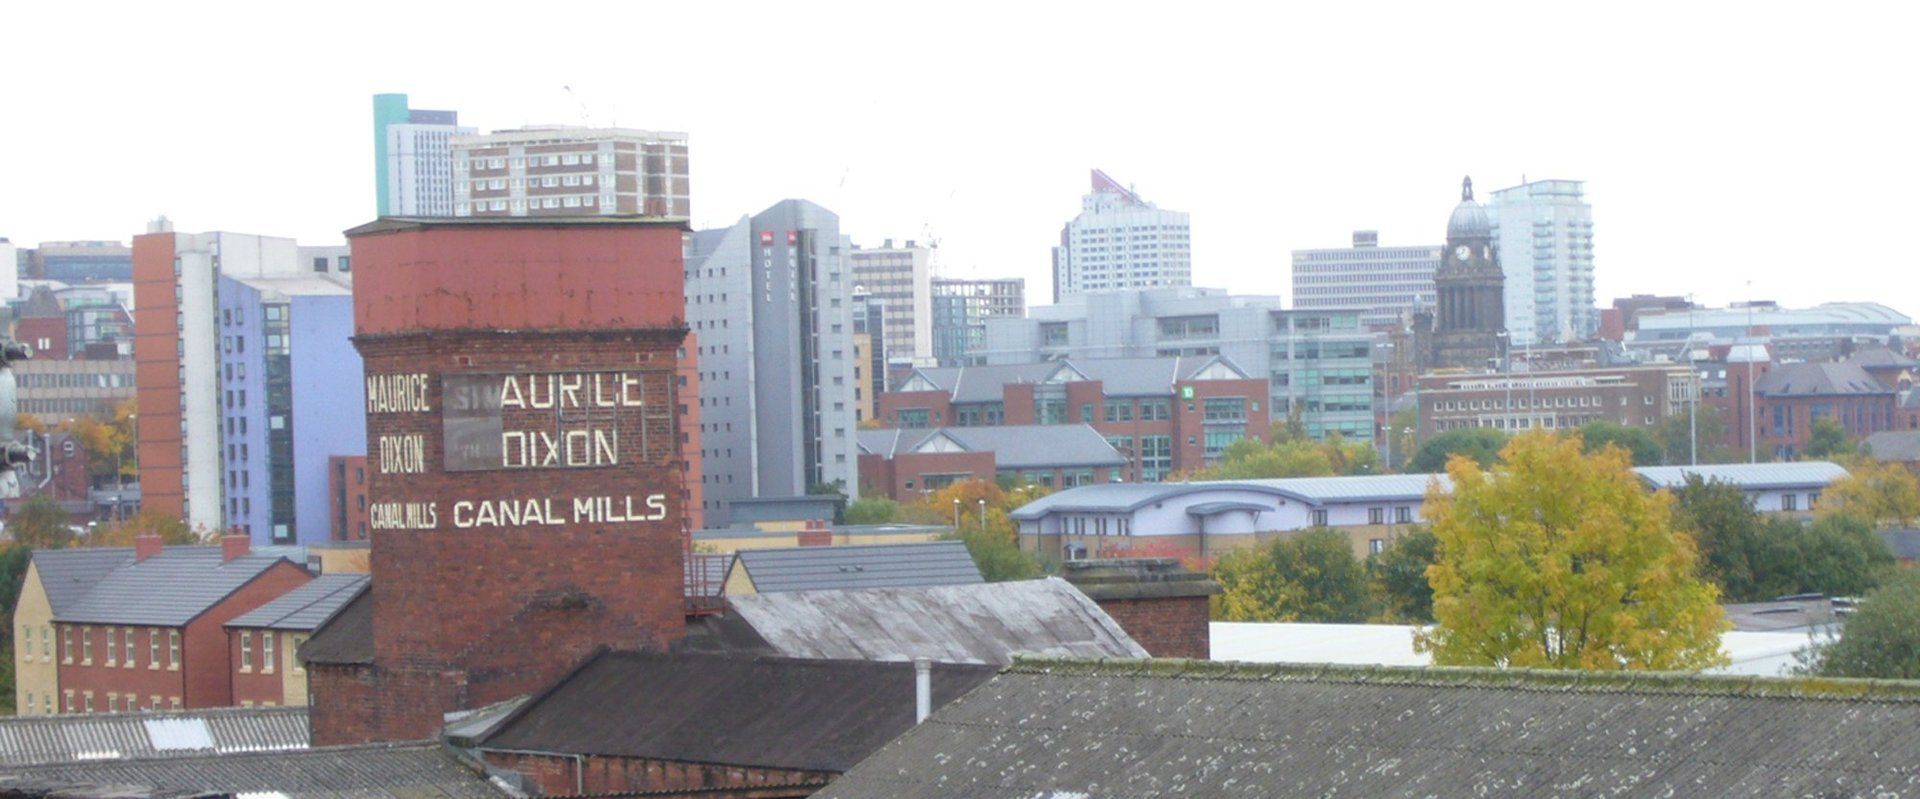 Canal mills, Leeds